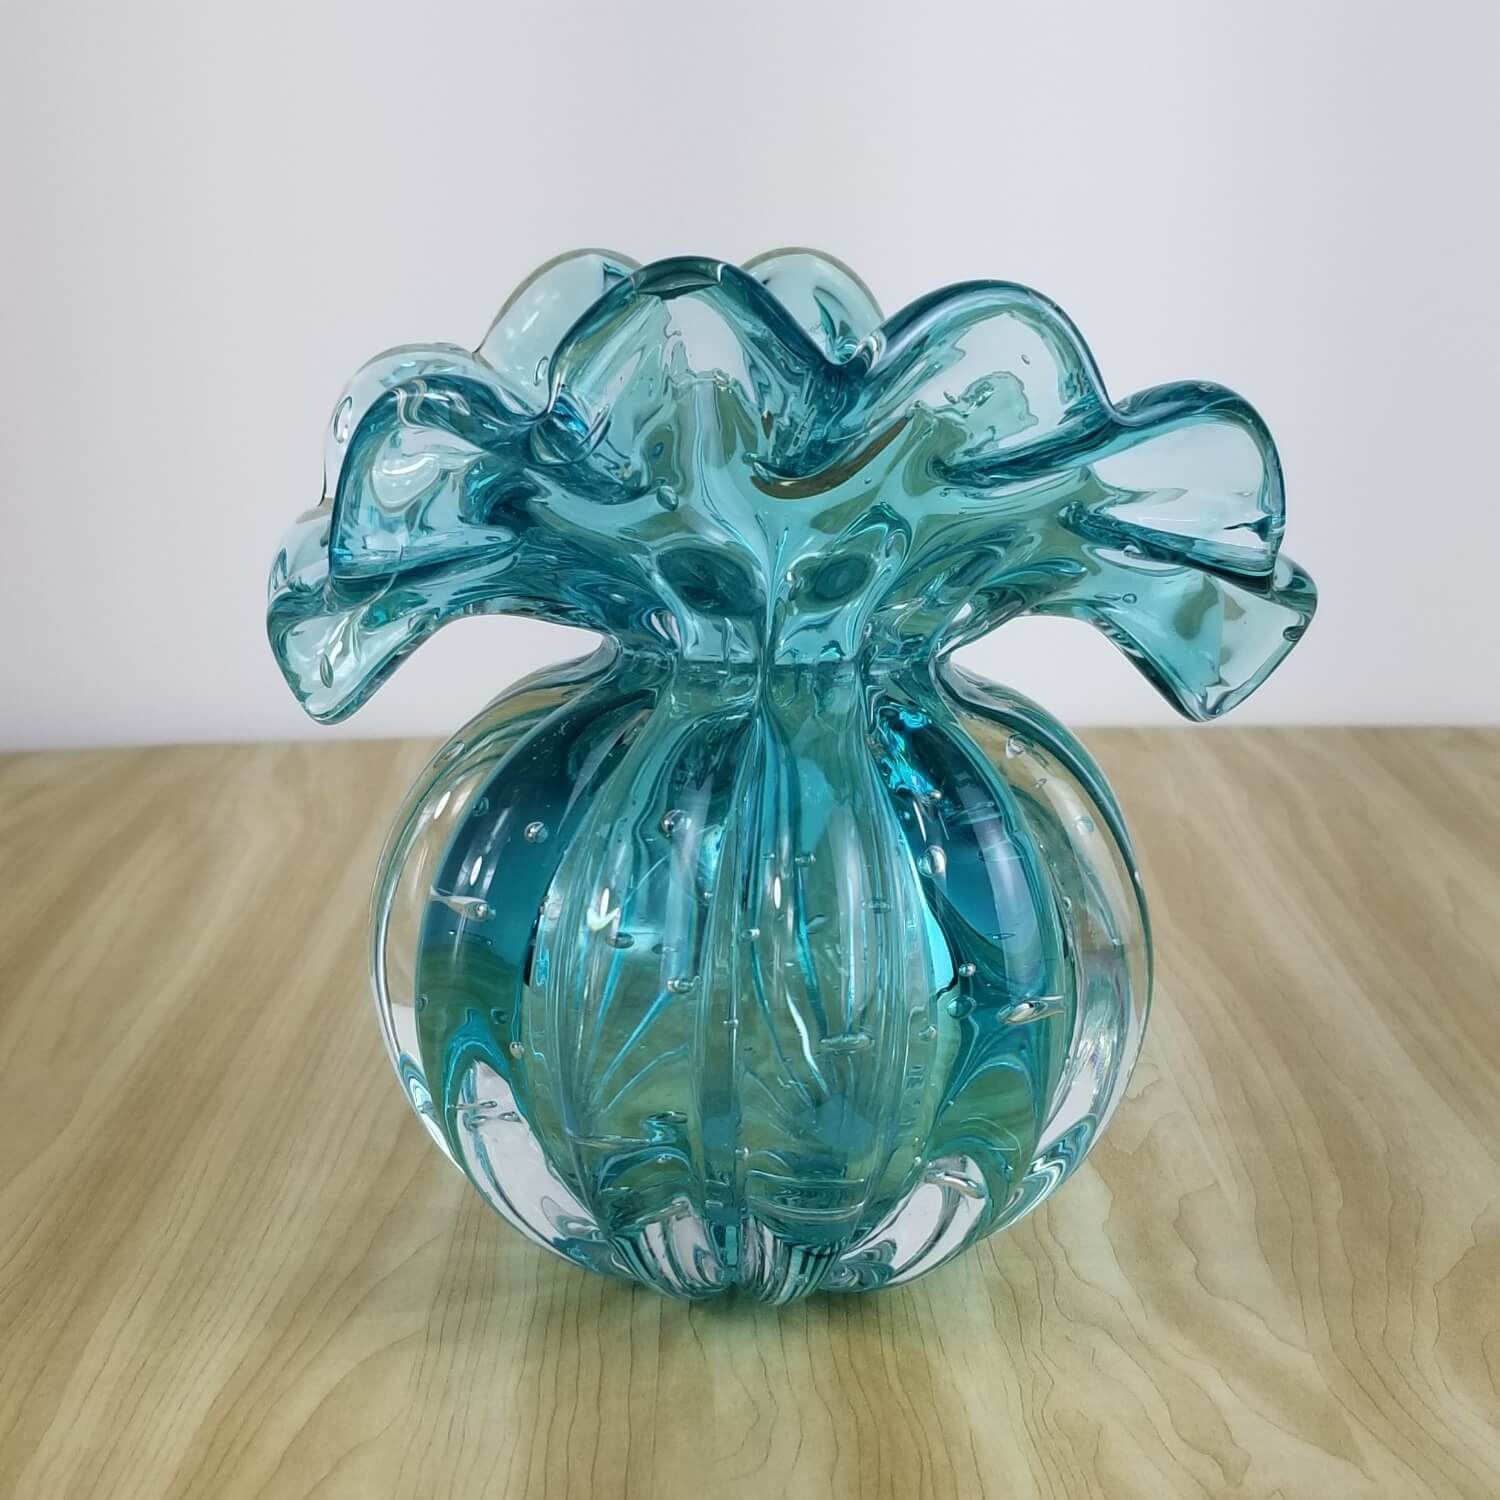 Trouxinha de Murano - Vaso Decorativo de Cristal Verde Esmeralda